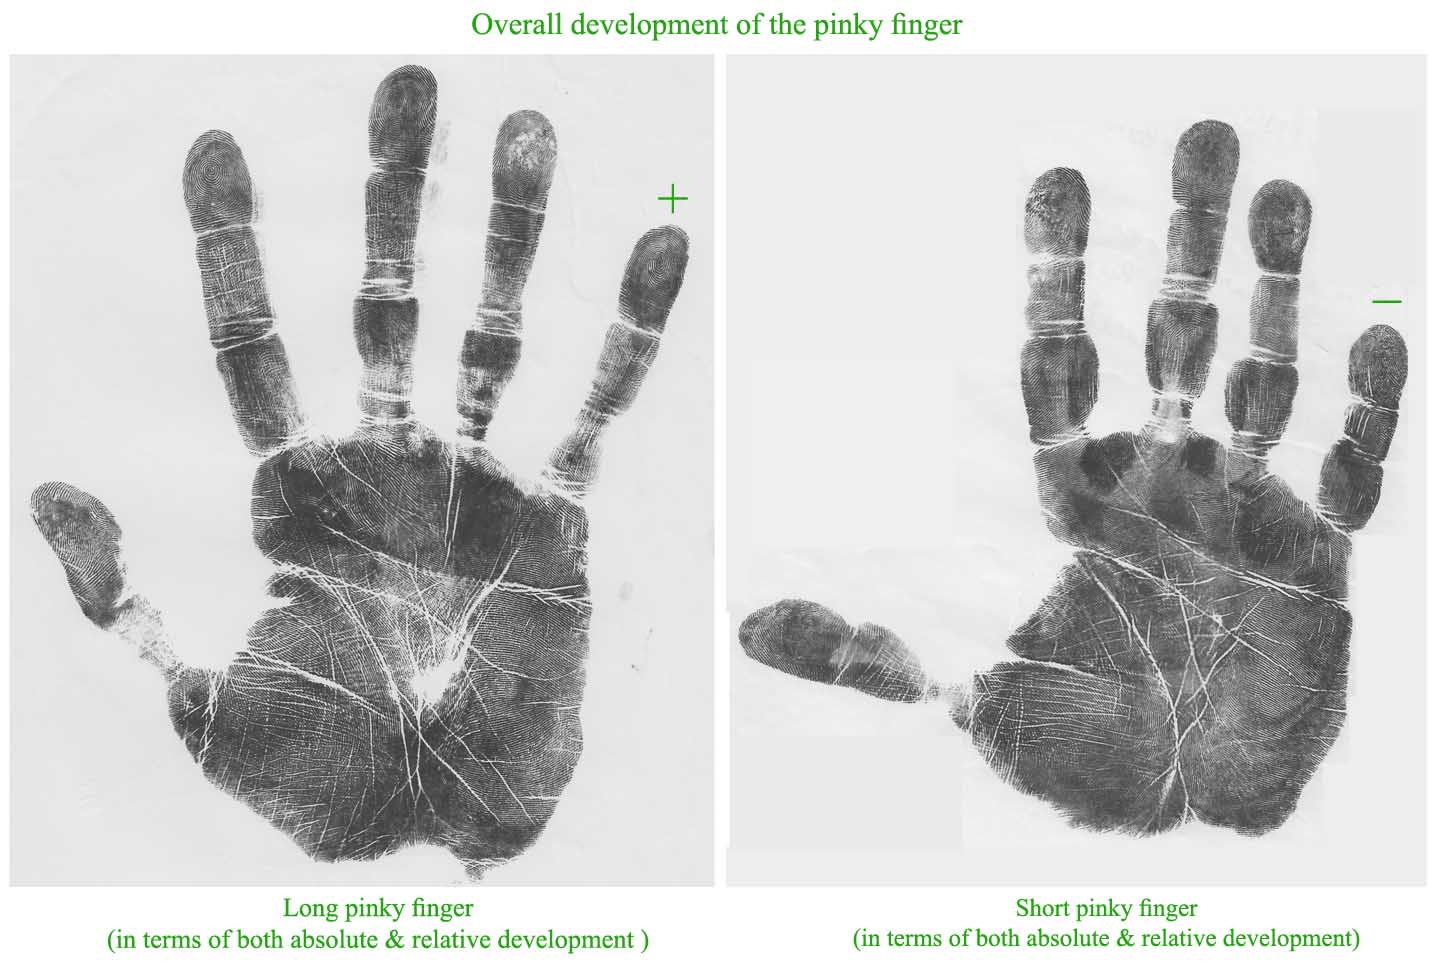 Overall development of the pinky finger: long versus short.